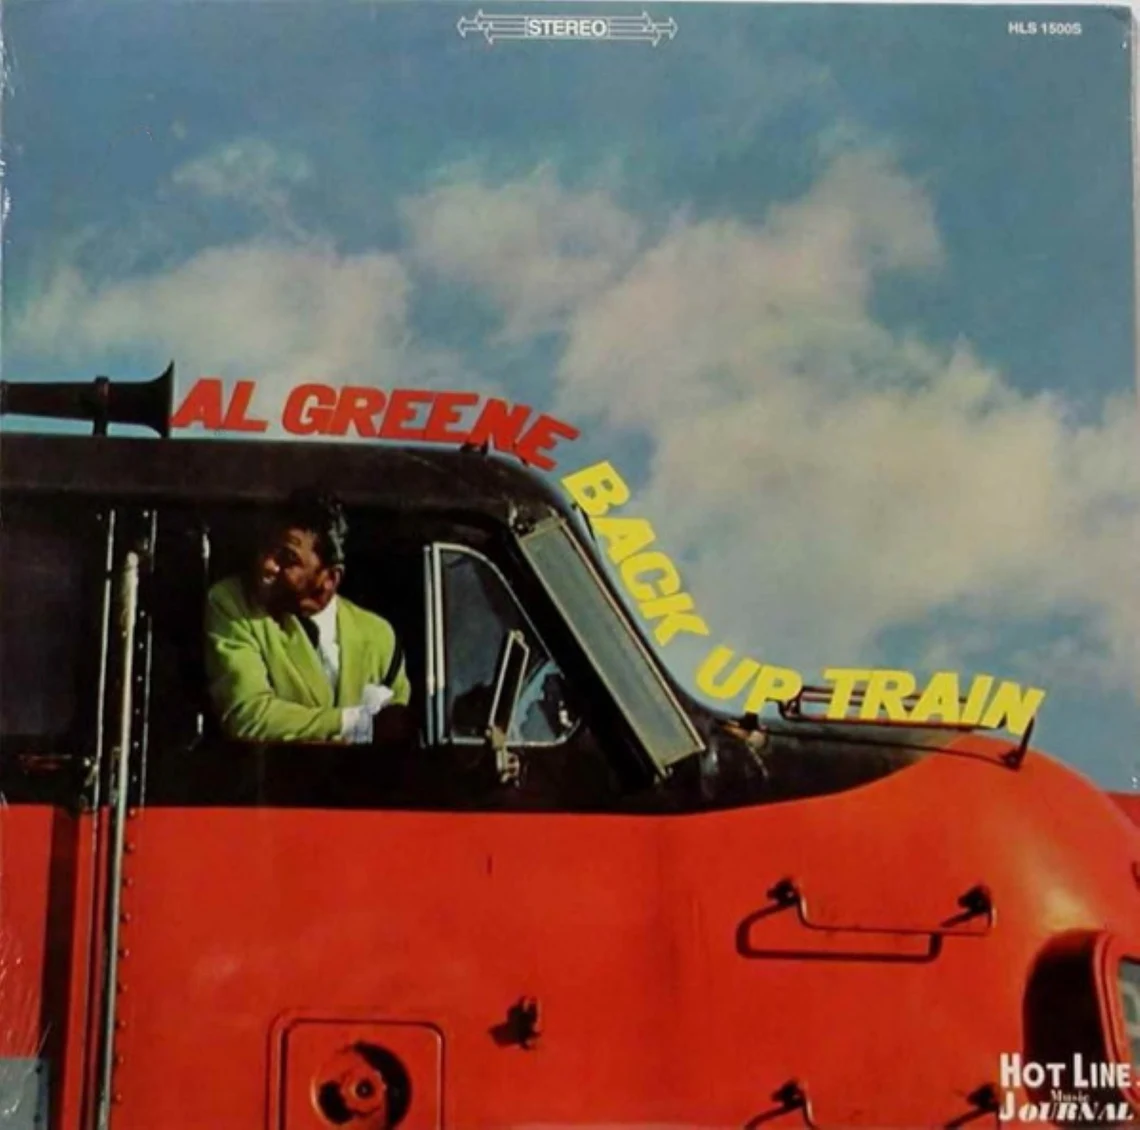 AL GREEN BACK UP TRAIN LP 1967 REEDITION VINYLE